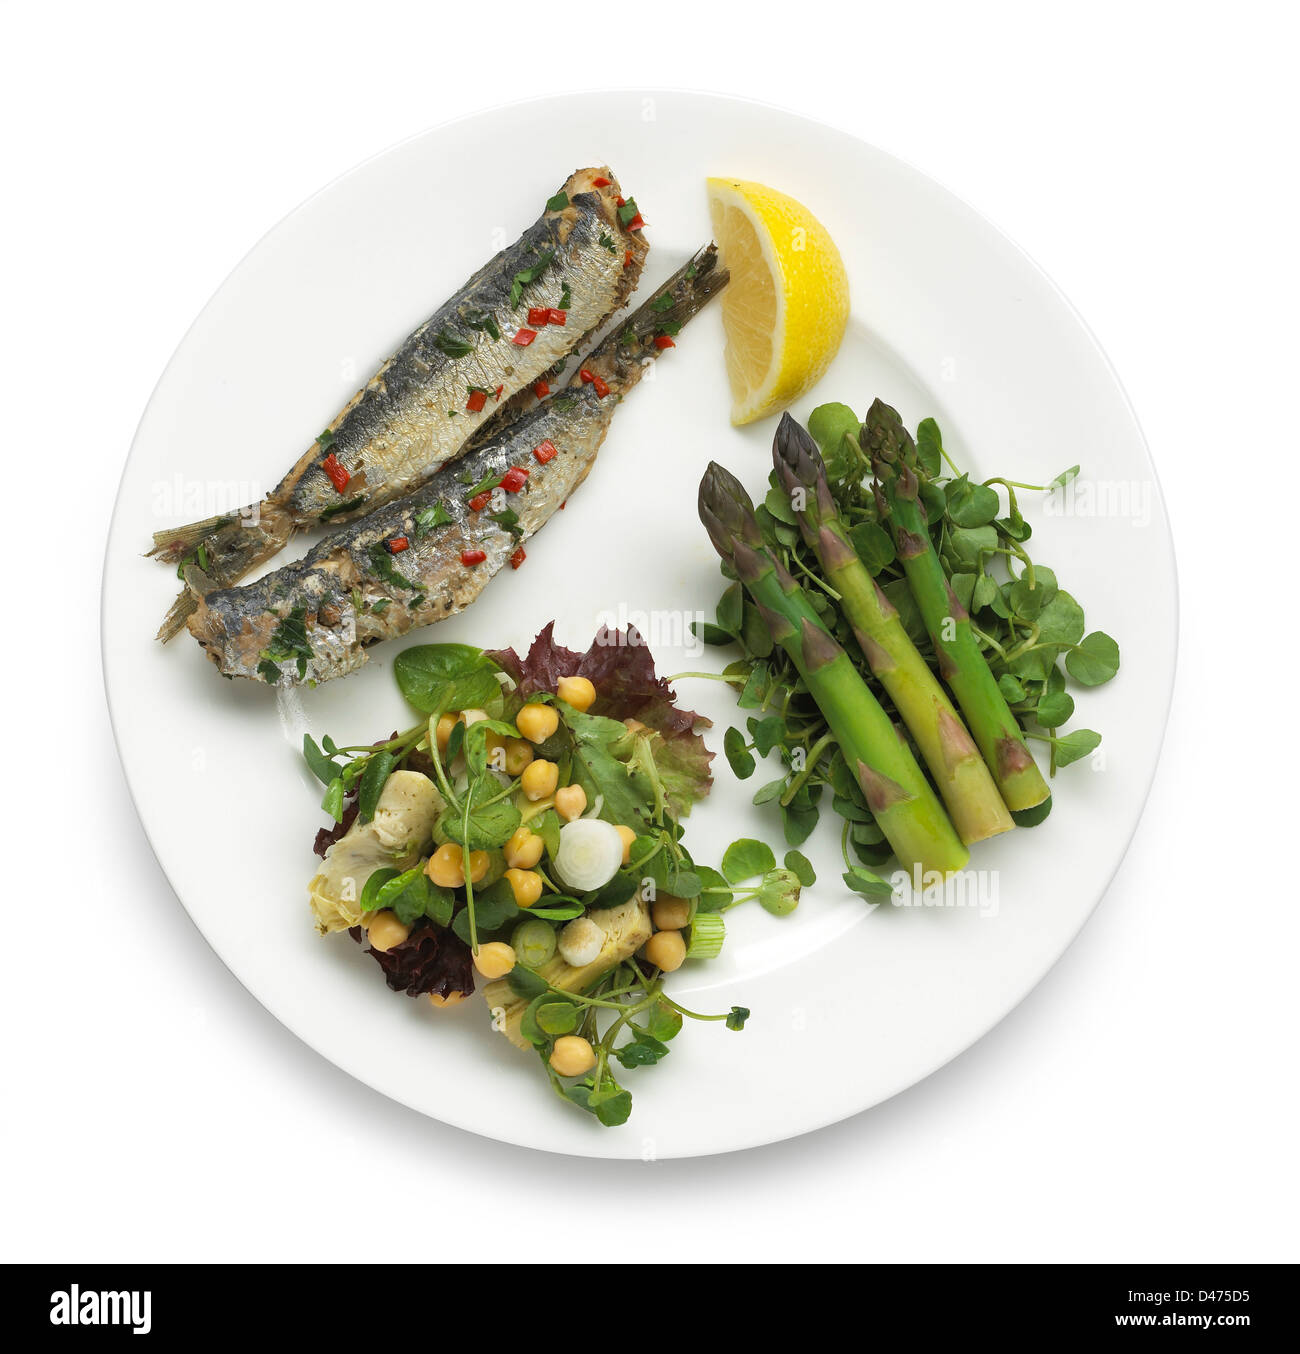 Plate of Fish lemon asparagus and salad Stock Photo